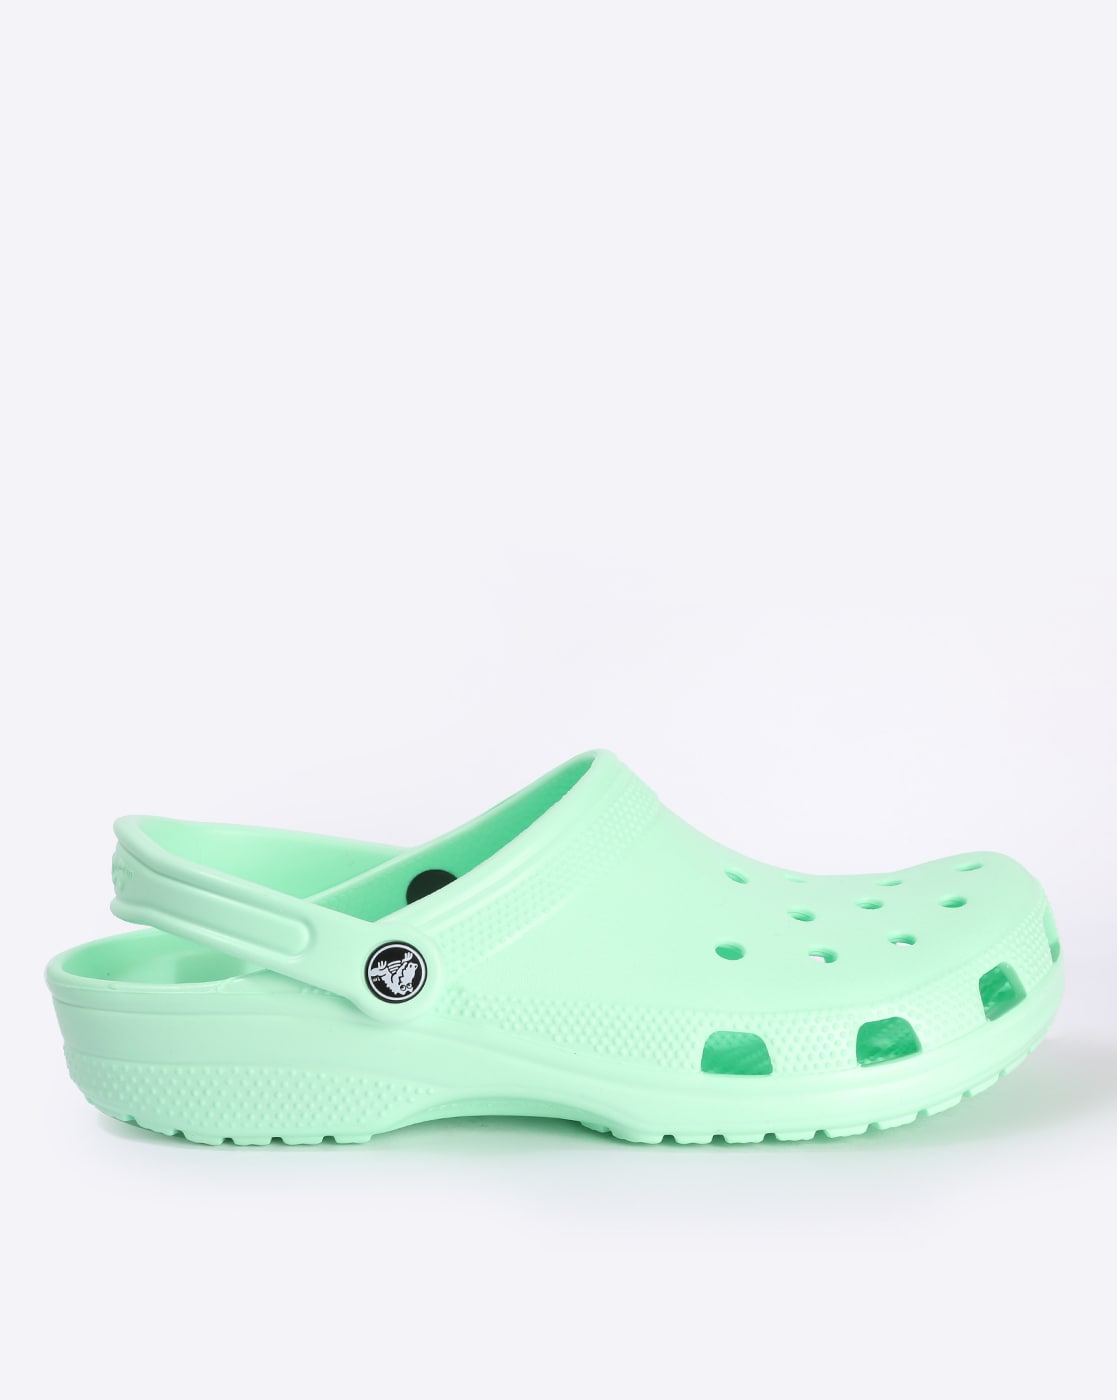 crocs best seller